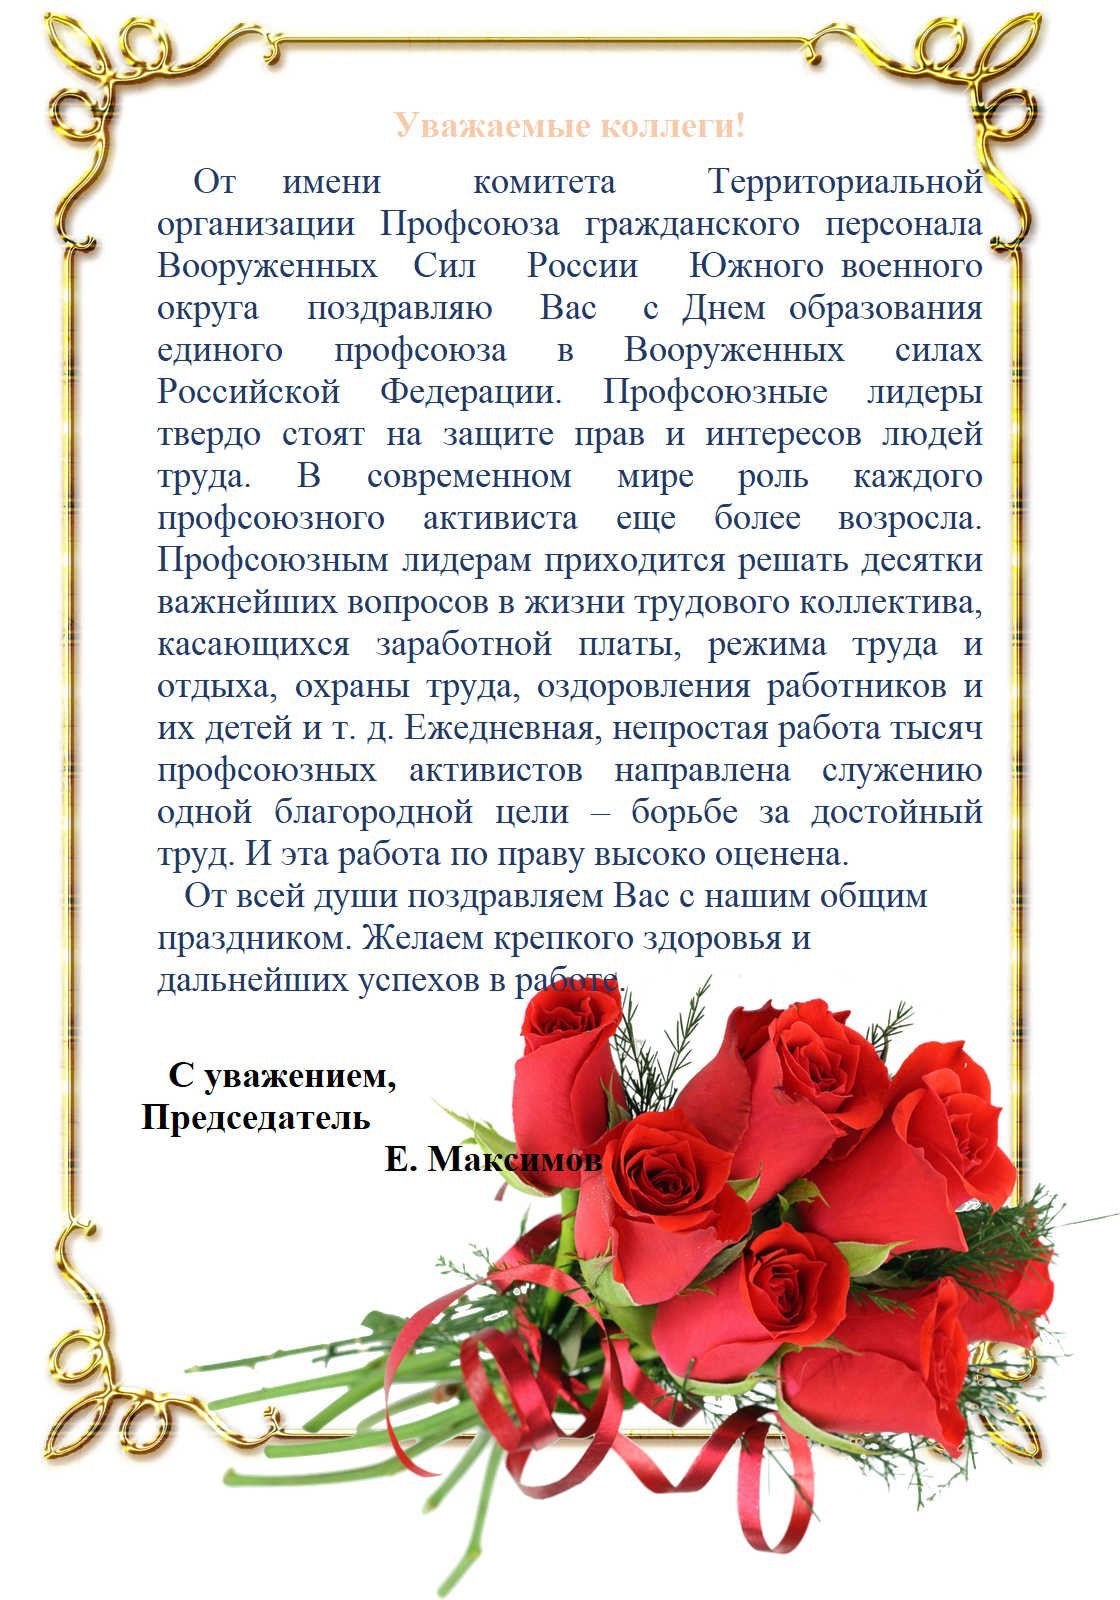 Поздравляем профсоюзного лидера с Юбилеем! | Федерация профсоюзов Республики Саха (Якутия)